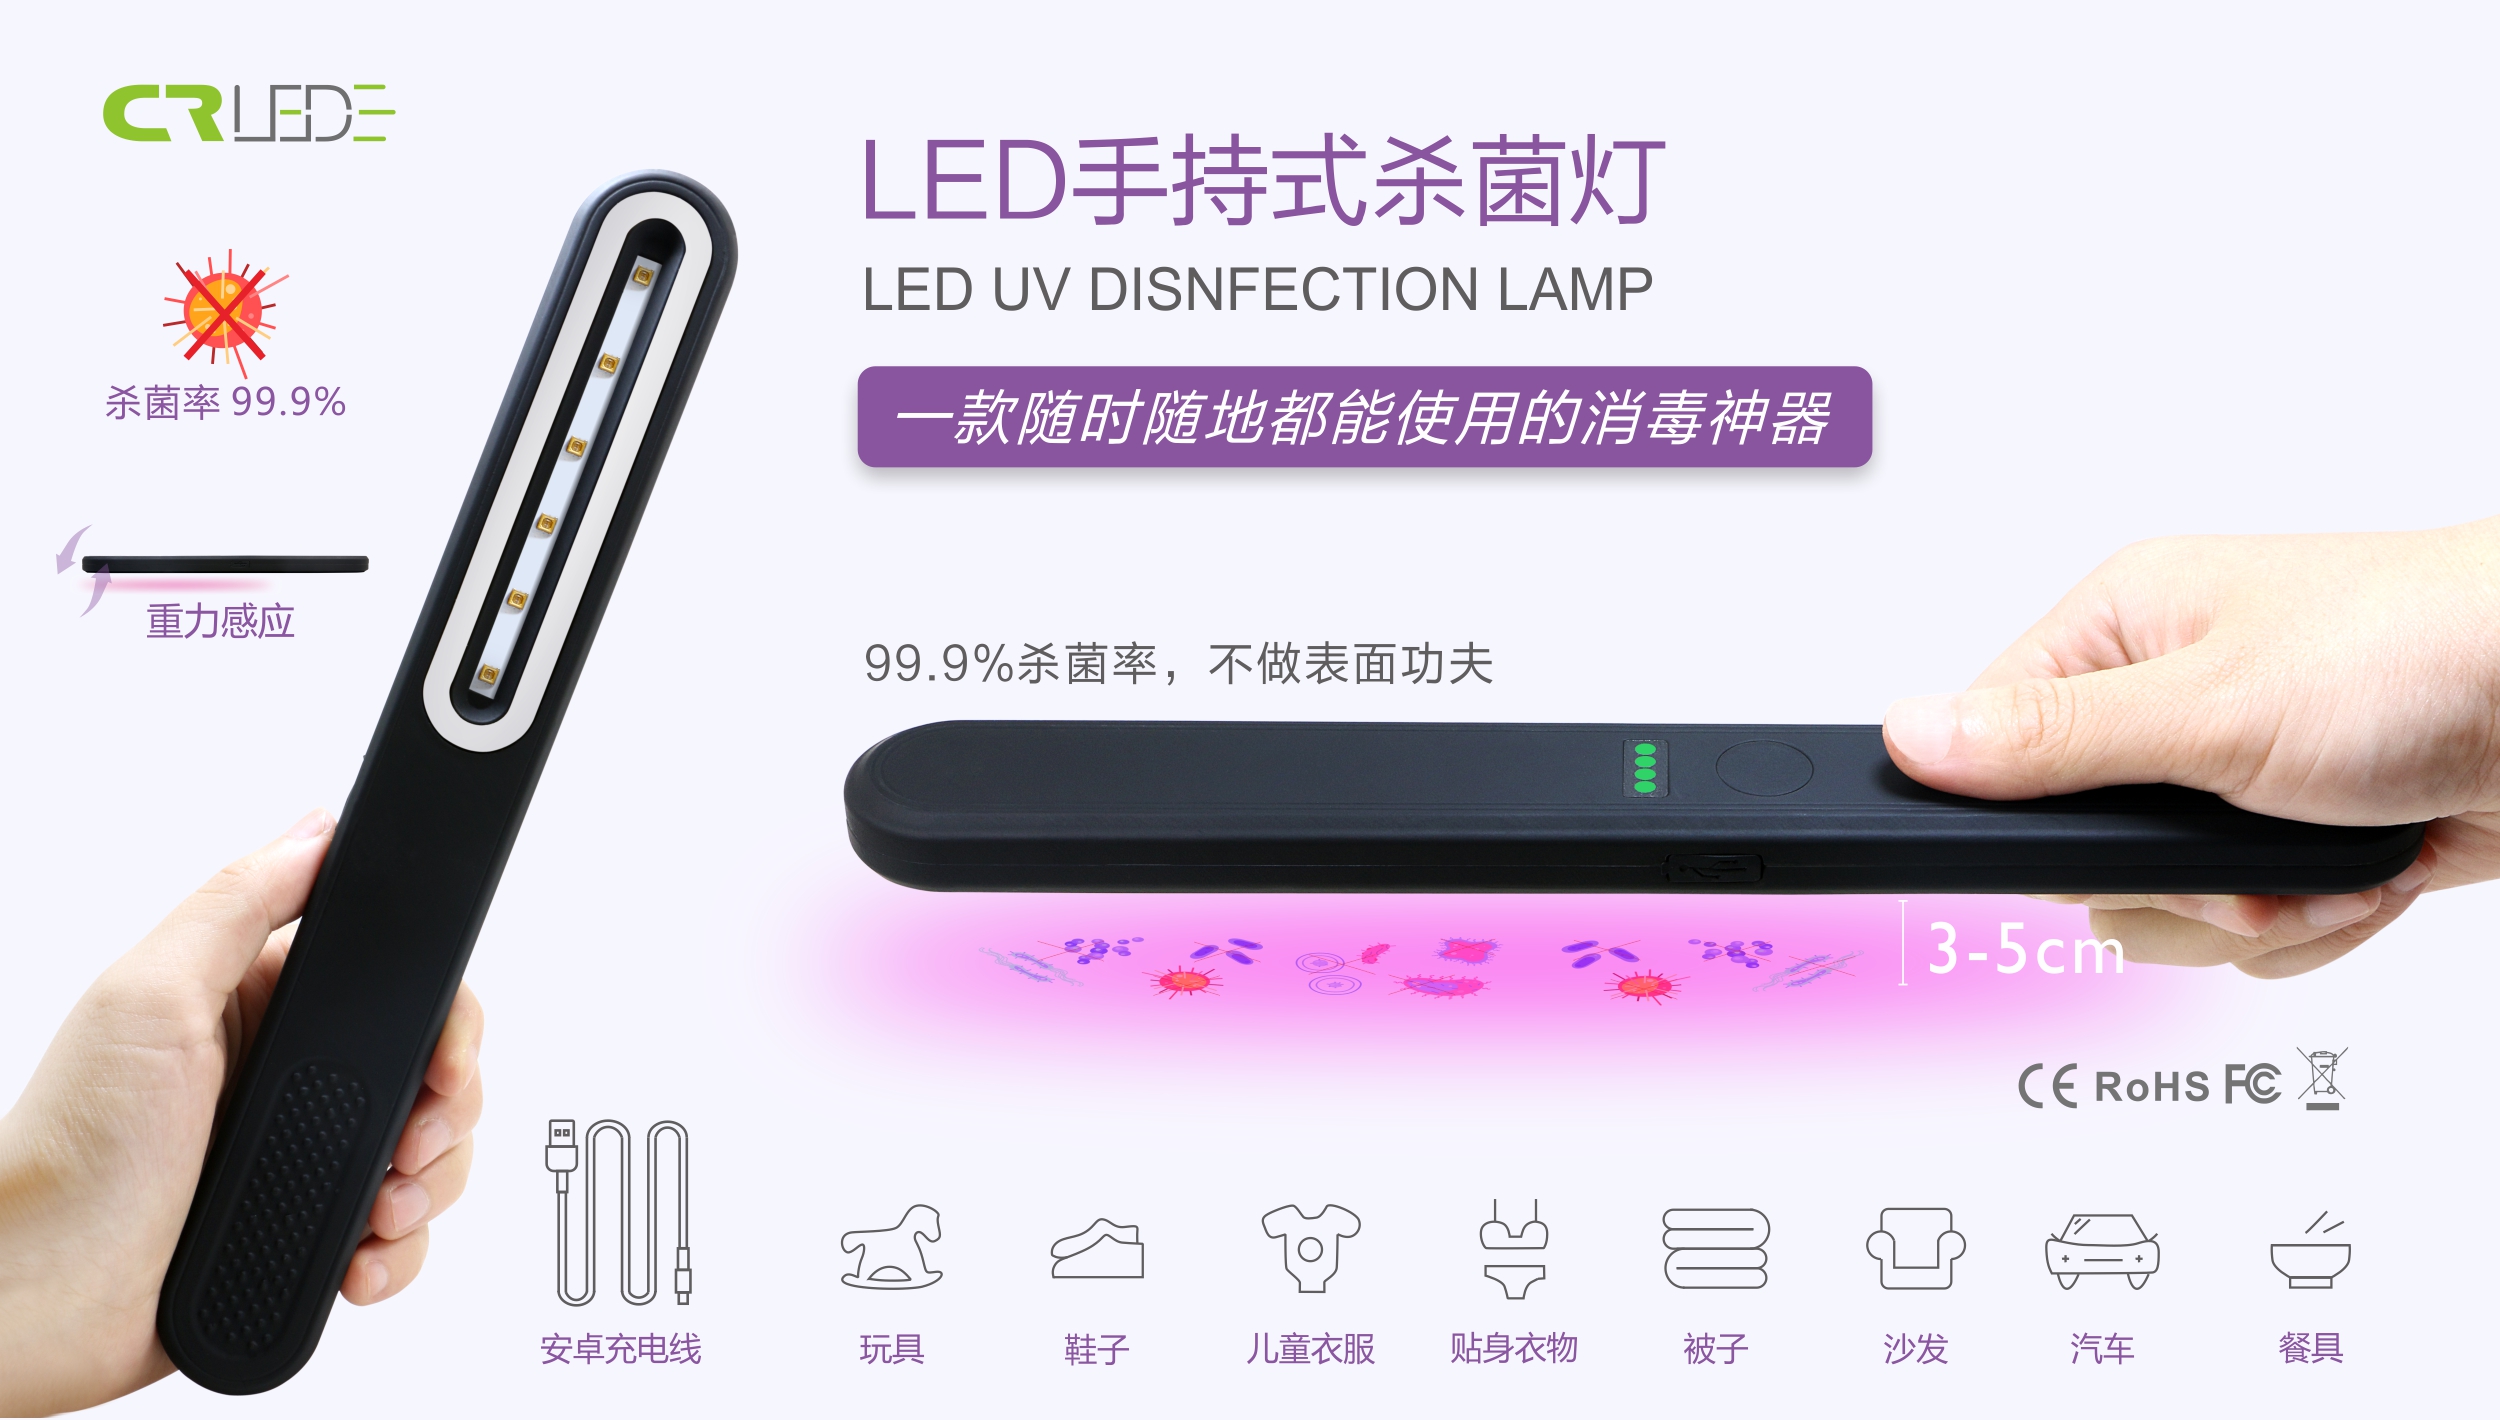 LED紫外线杀菌灯便携式UVC消毒灯手持式杀菌灯紫外线消毒灯厂家